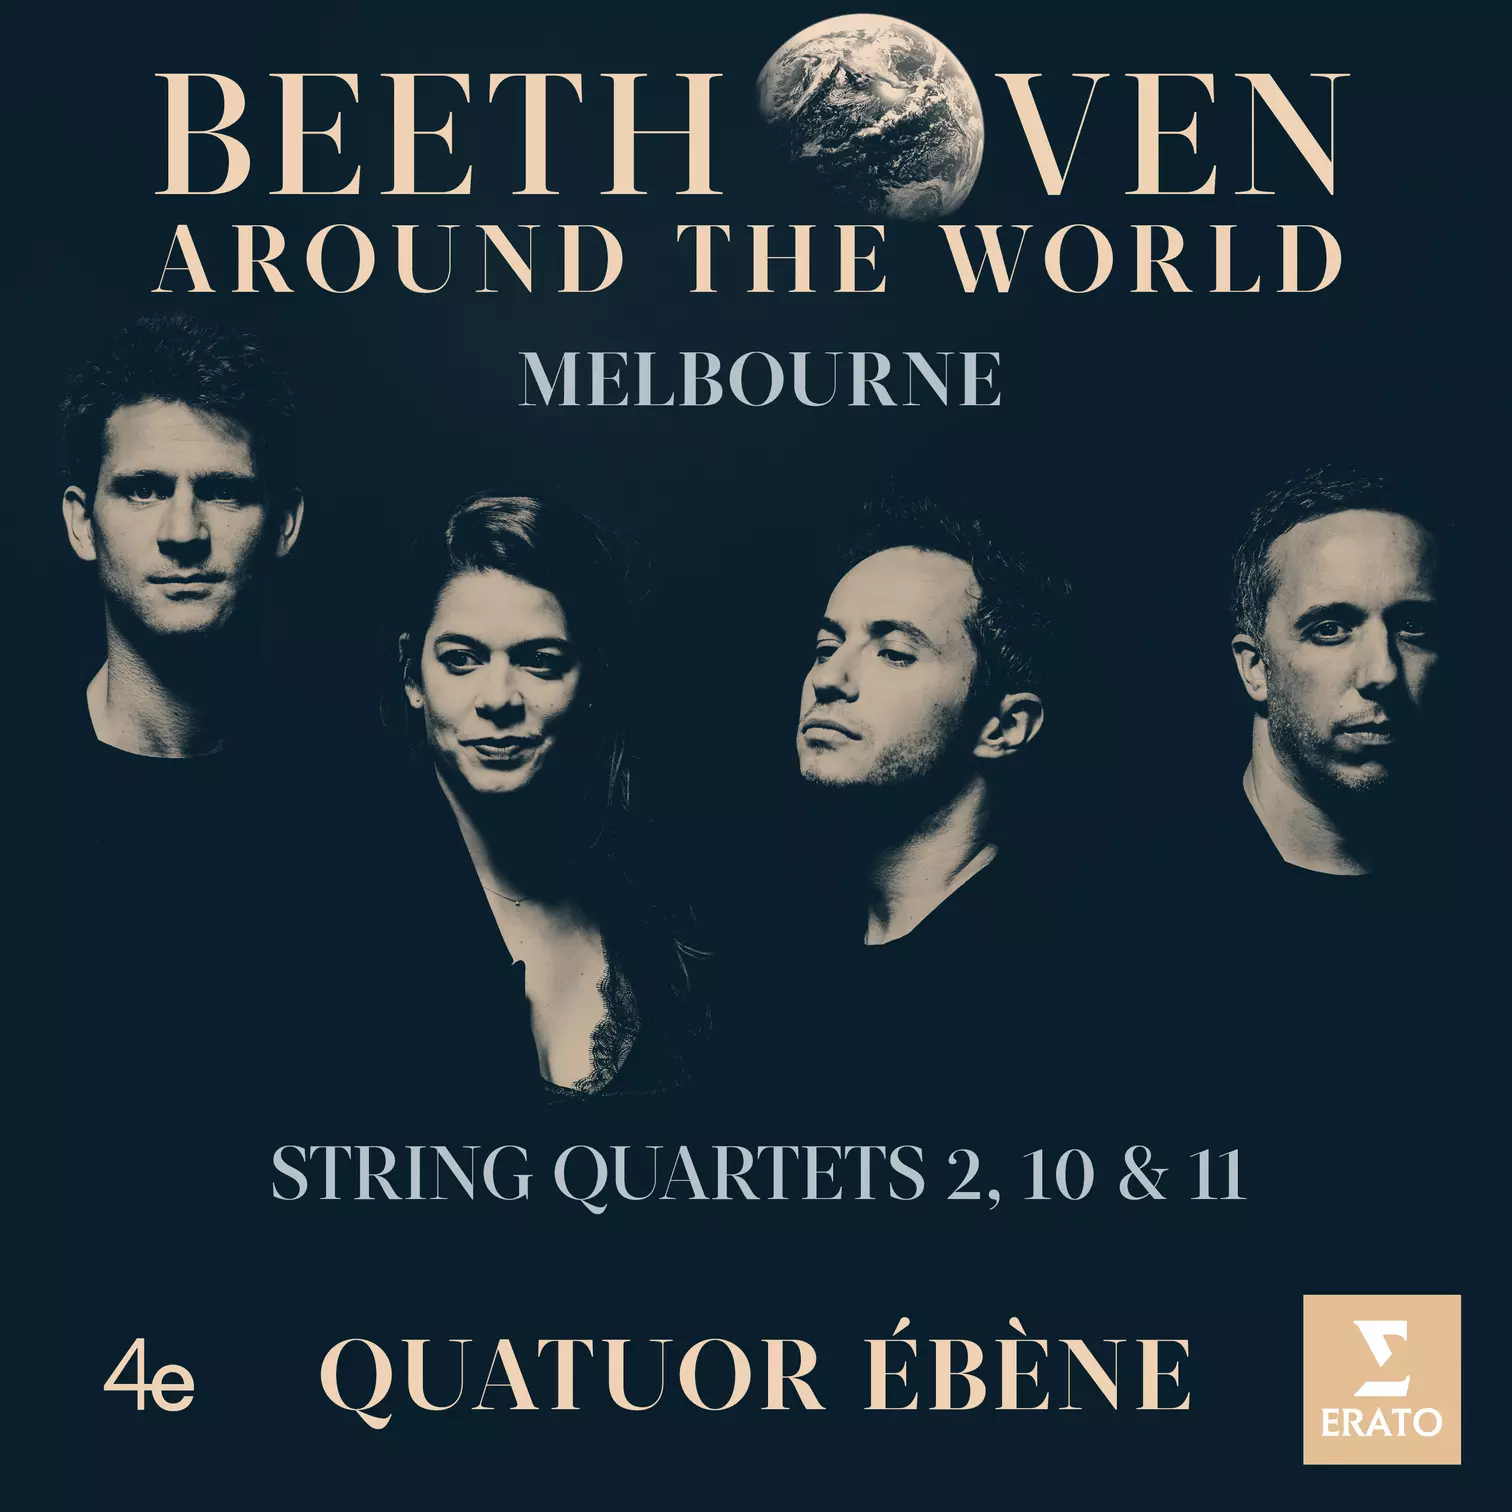 Beethoven Around the World - Melbourne - String Quartets 2, 10 & 11